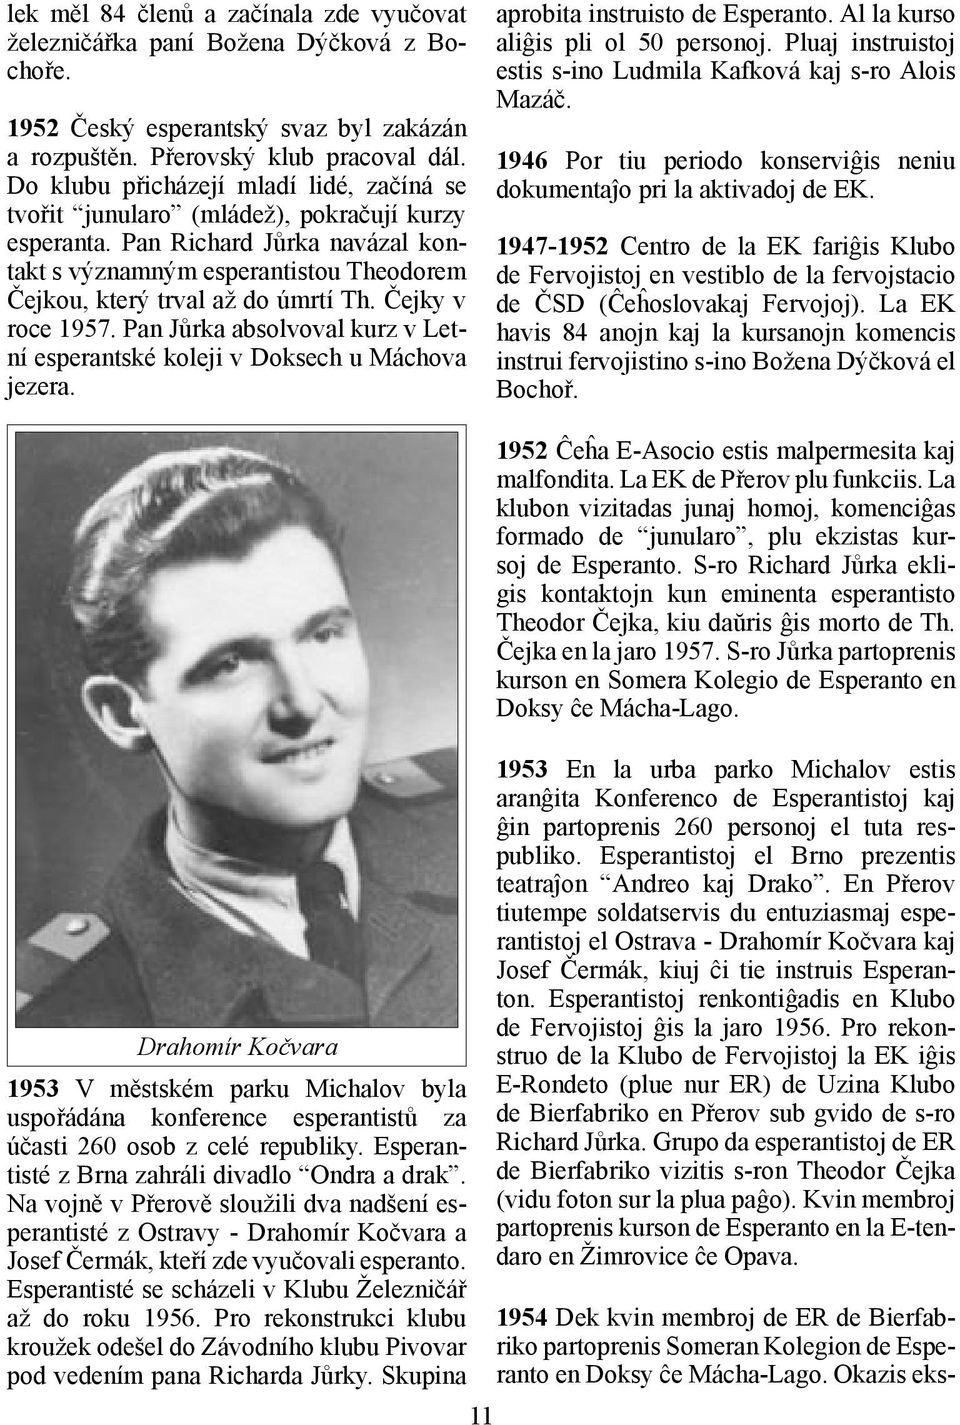 Čejky v roce 1957. Pan Jůrka absolvoval kurz v Letní esperantské koleji v Doksech u Máchova jezera. aprobita instruisto de Esperanto. Al la kurso aliĝis pli ol 50 personoj.